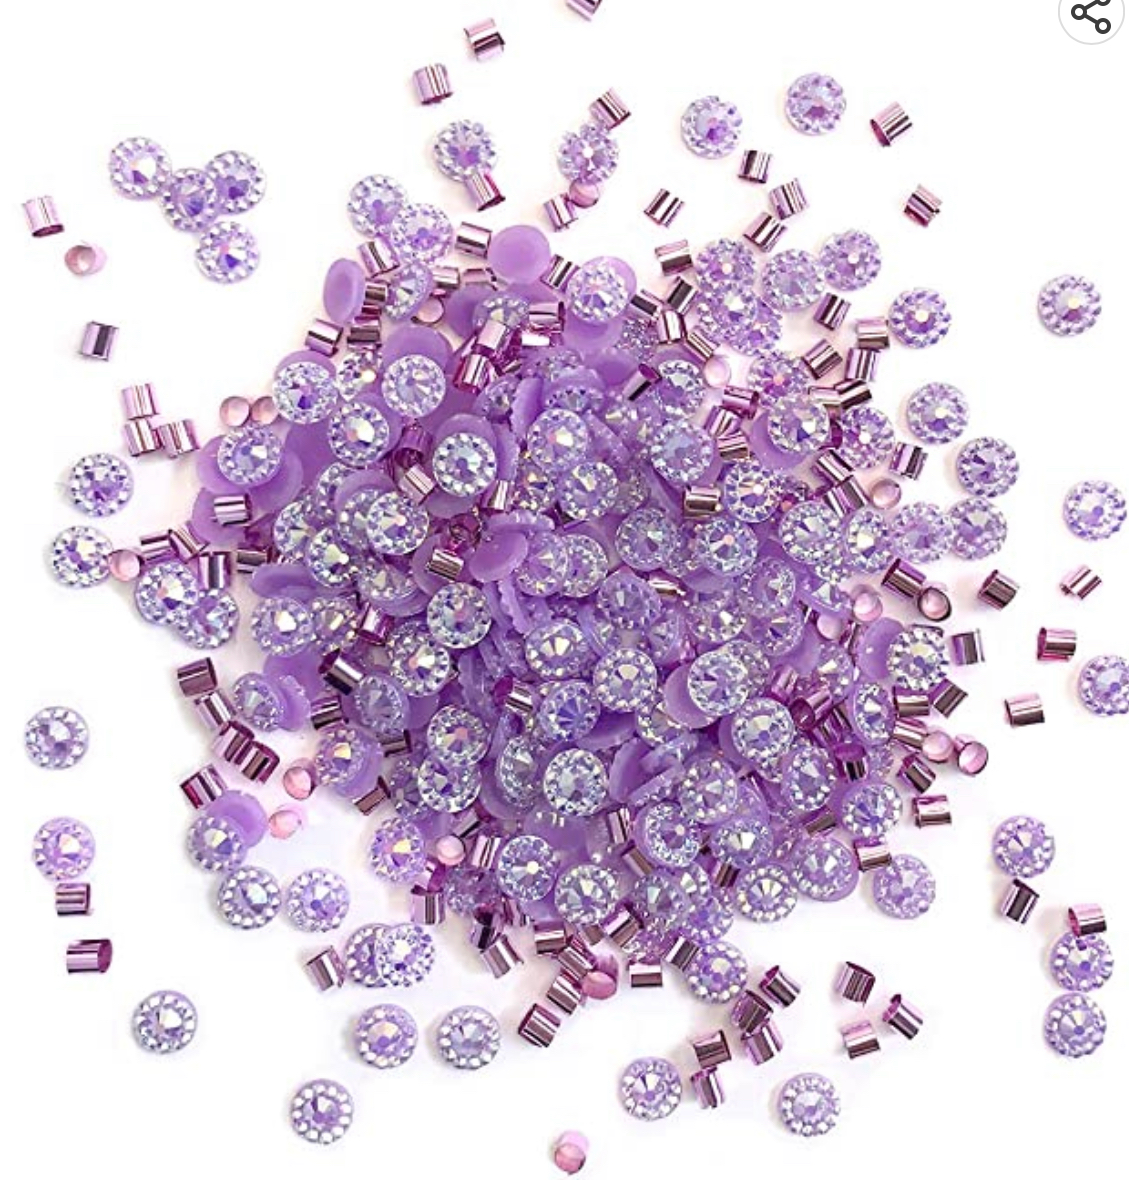 Buttons Galore - Doo Dadz - Purple Rain